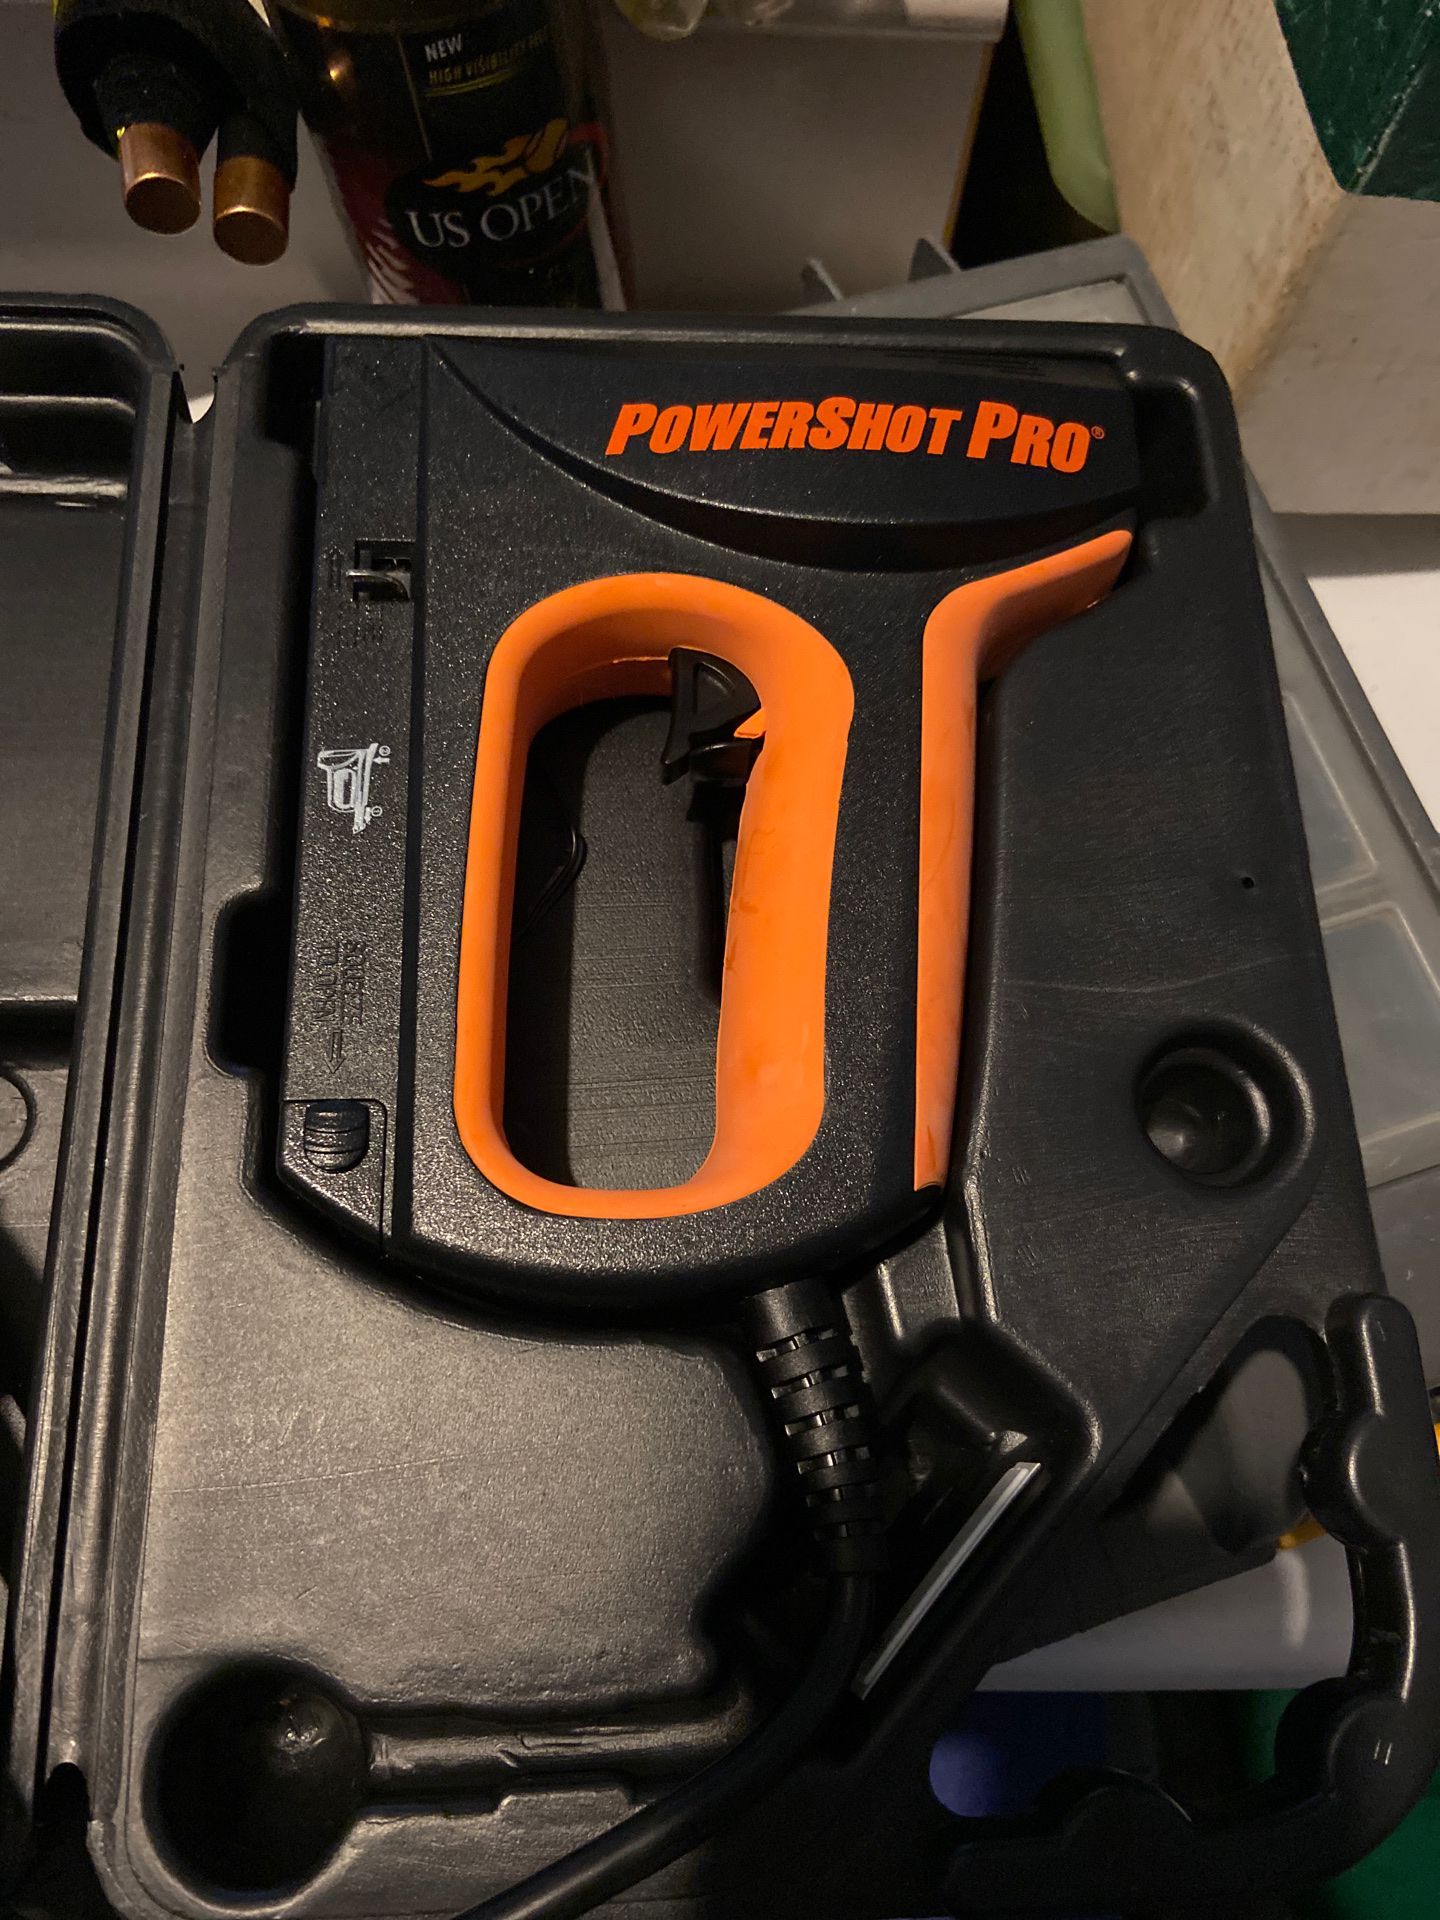 Powershot pro electric staple and nail gun